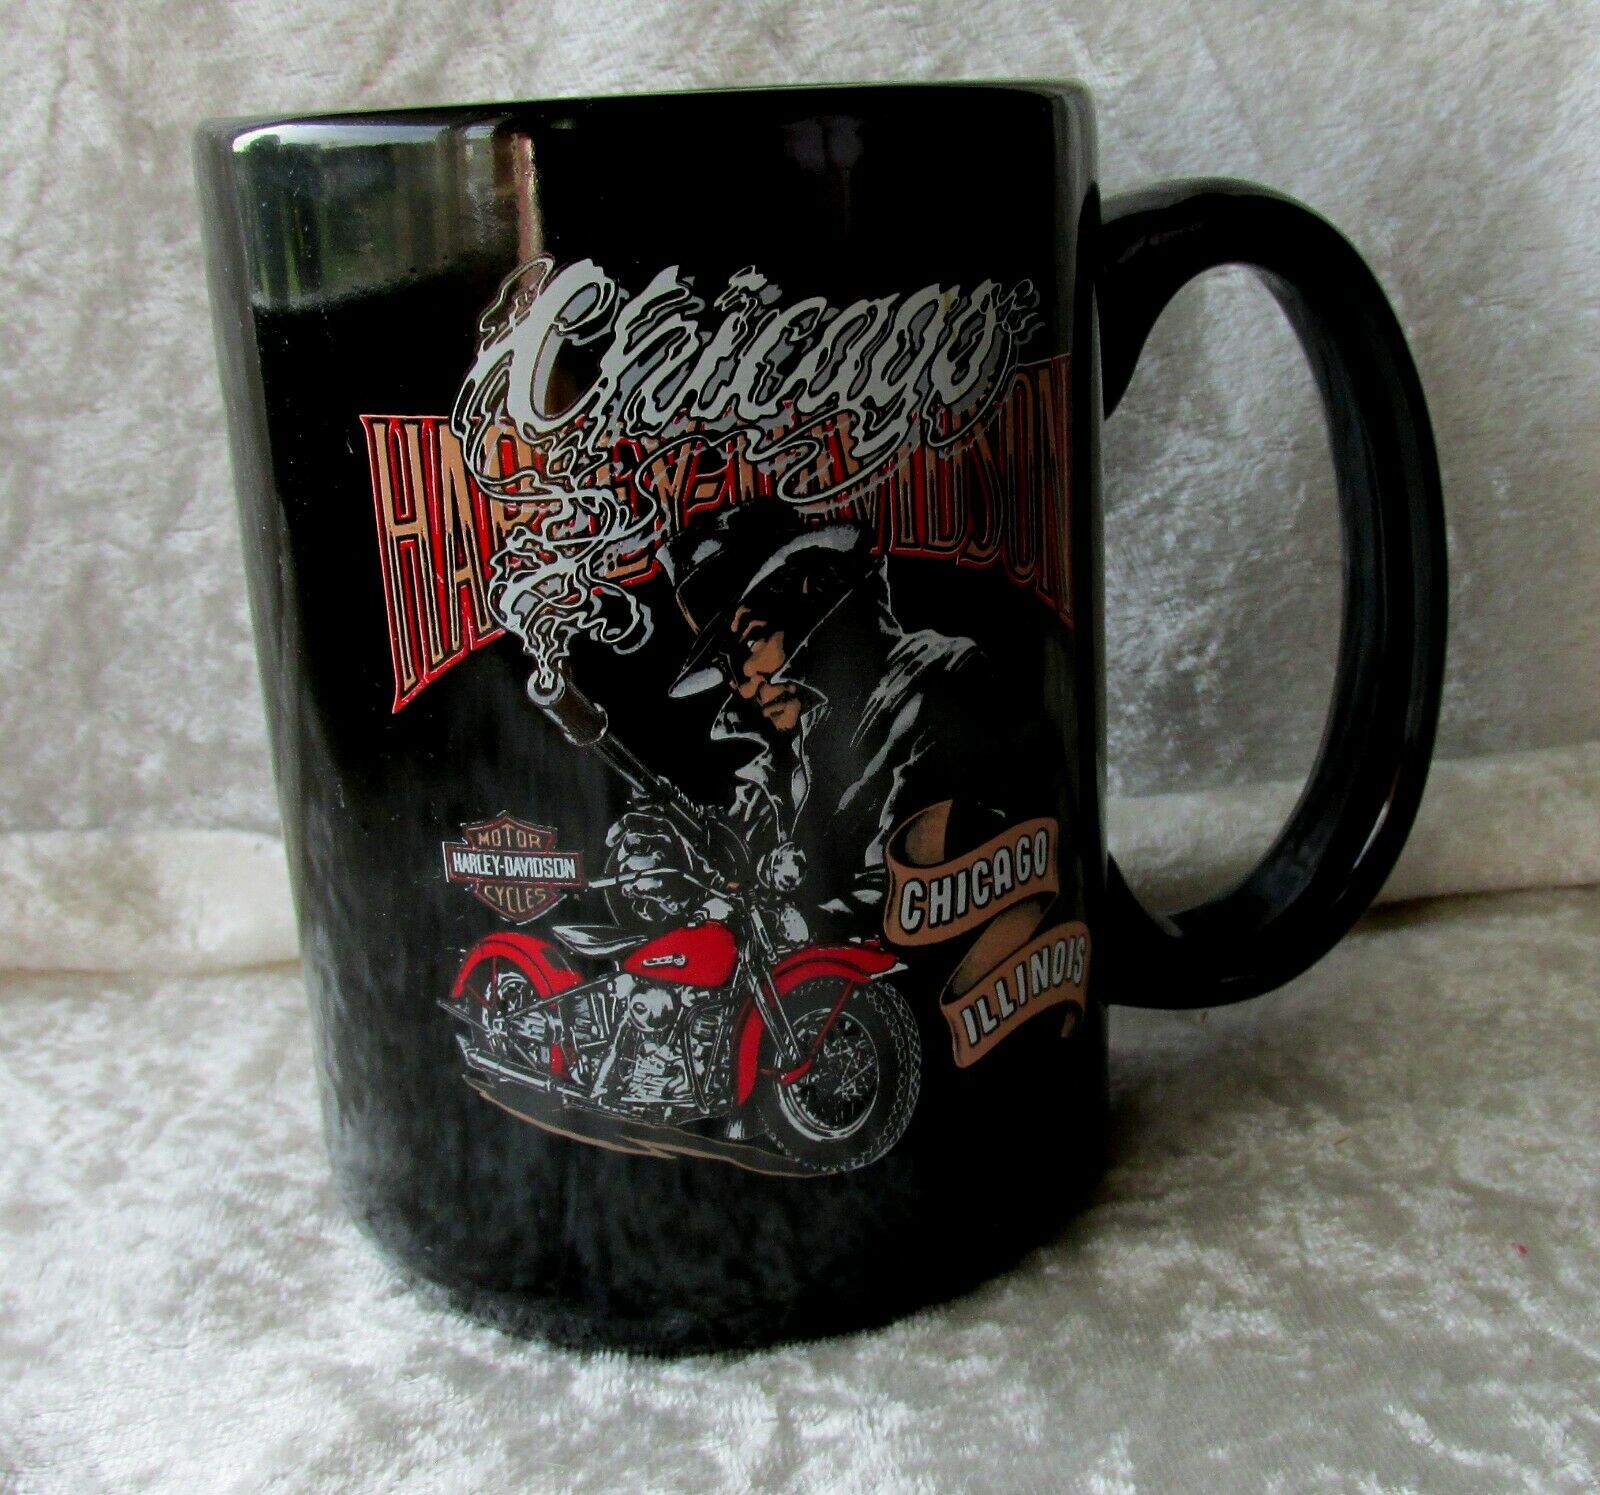 Harley Davidson Motorcycles Smoking Gun Chicago Black mug collectible colorful